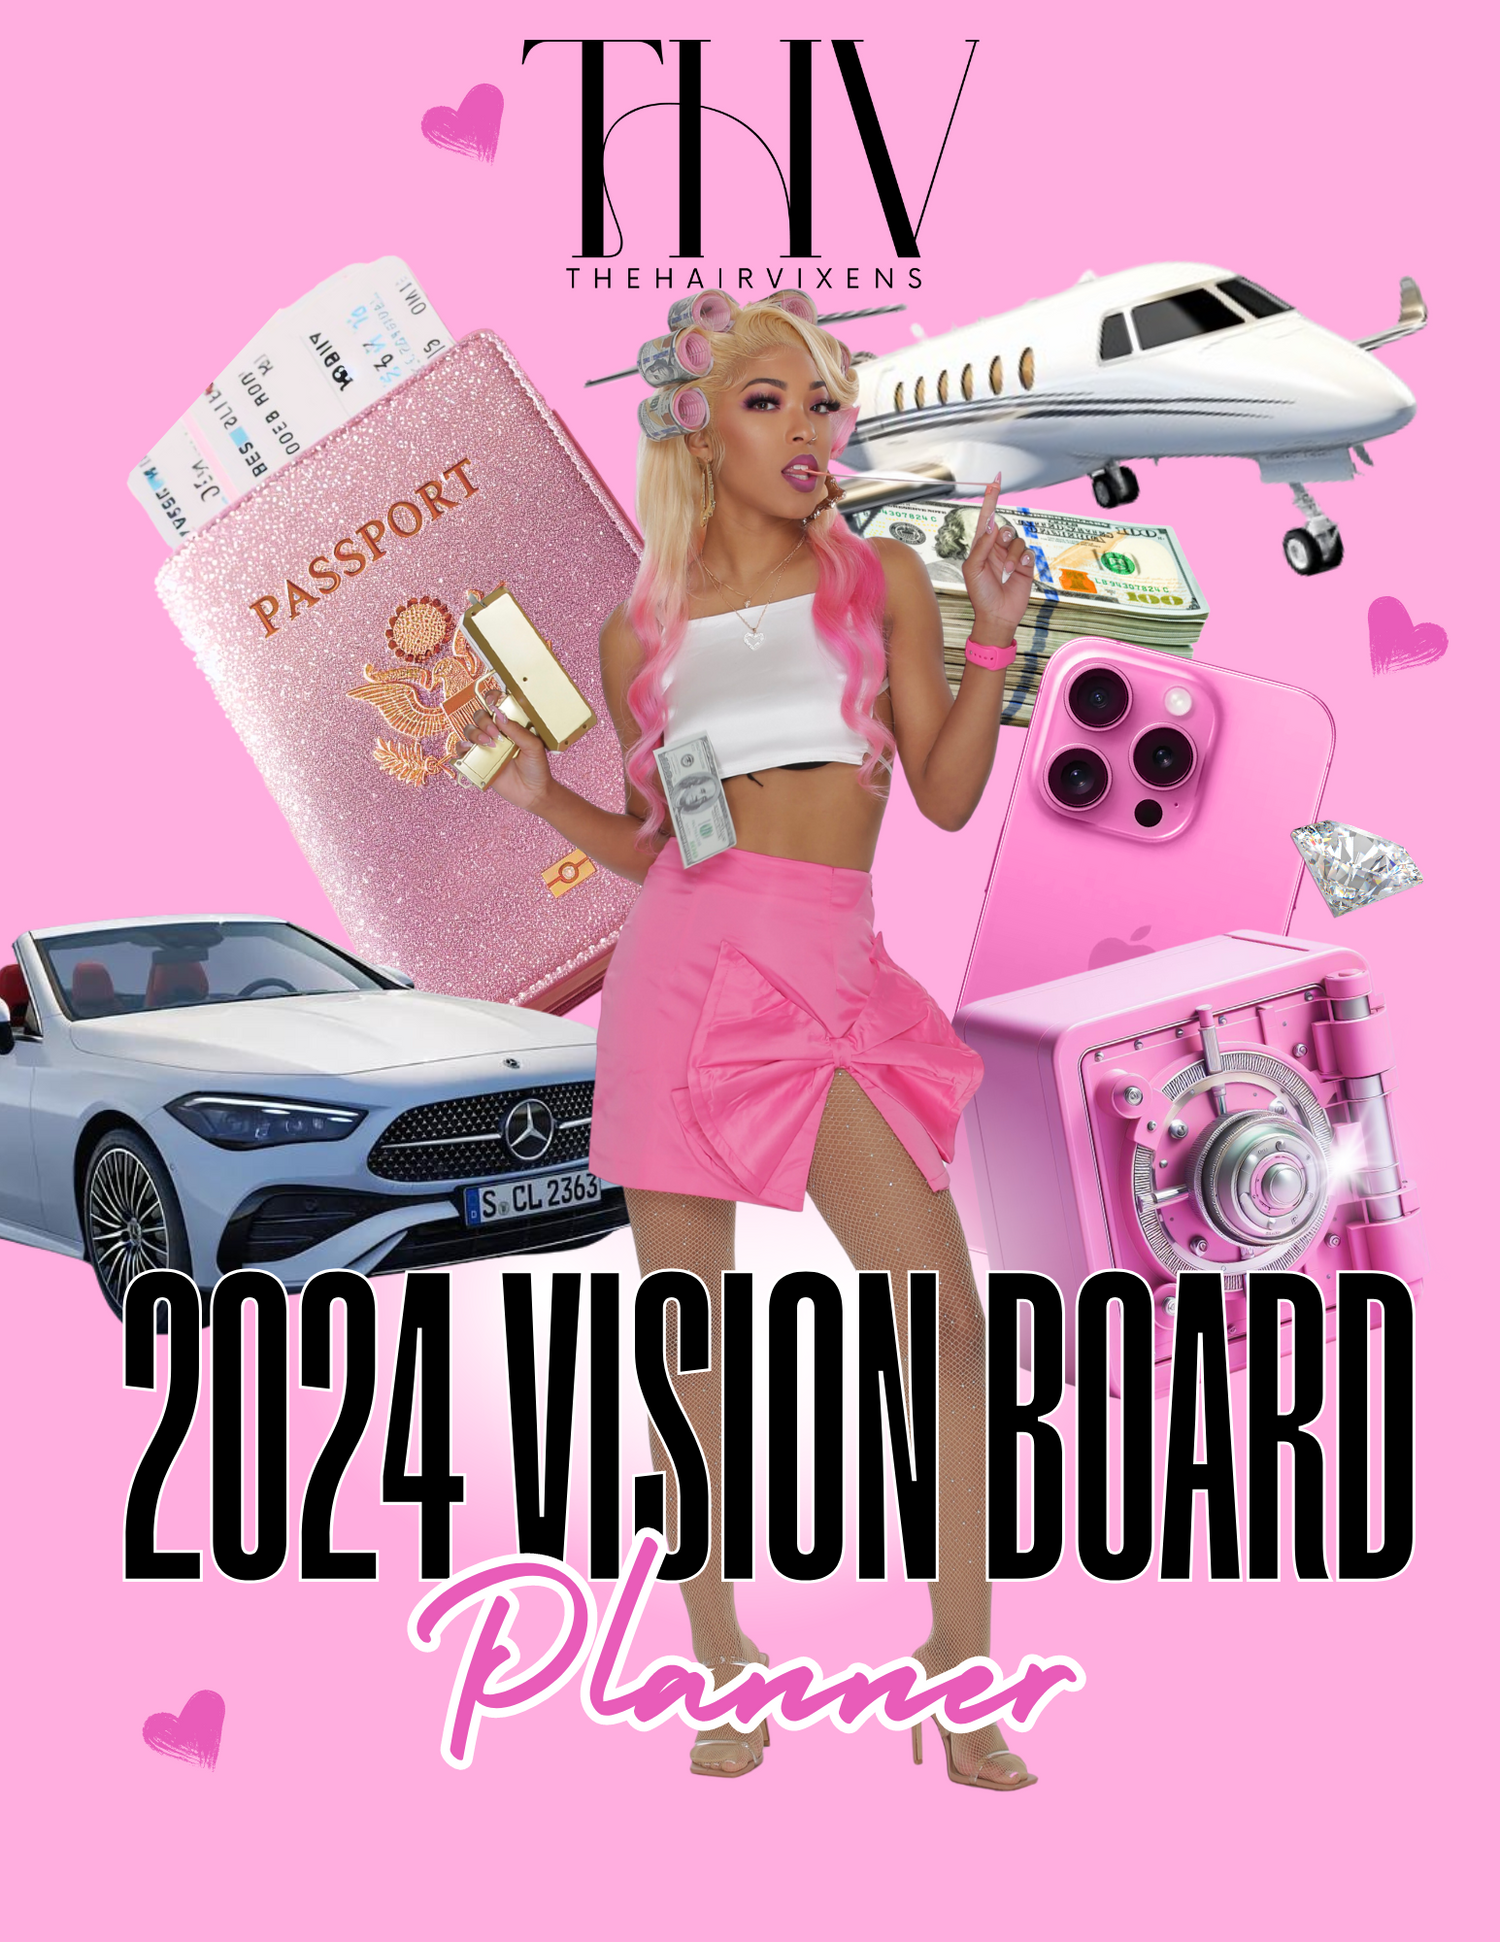 2024 Vision Board Planner